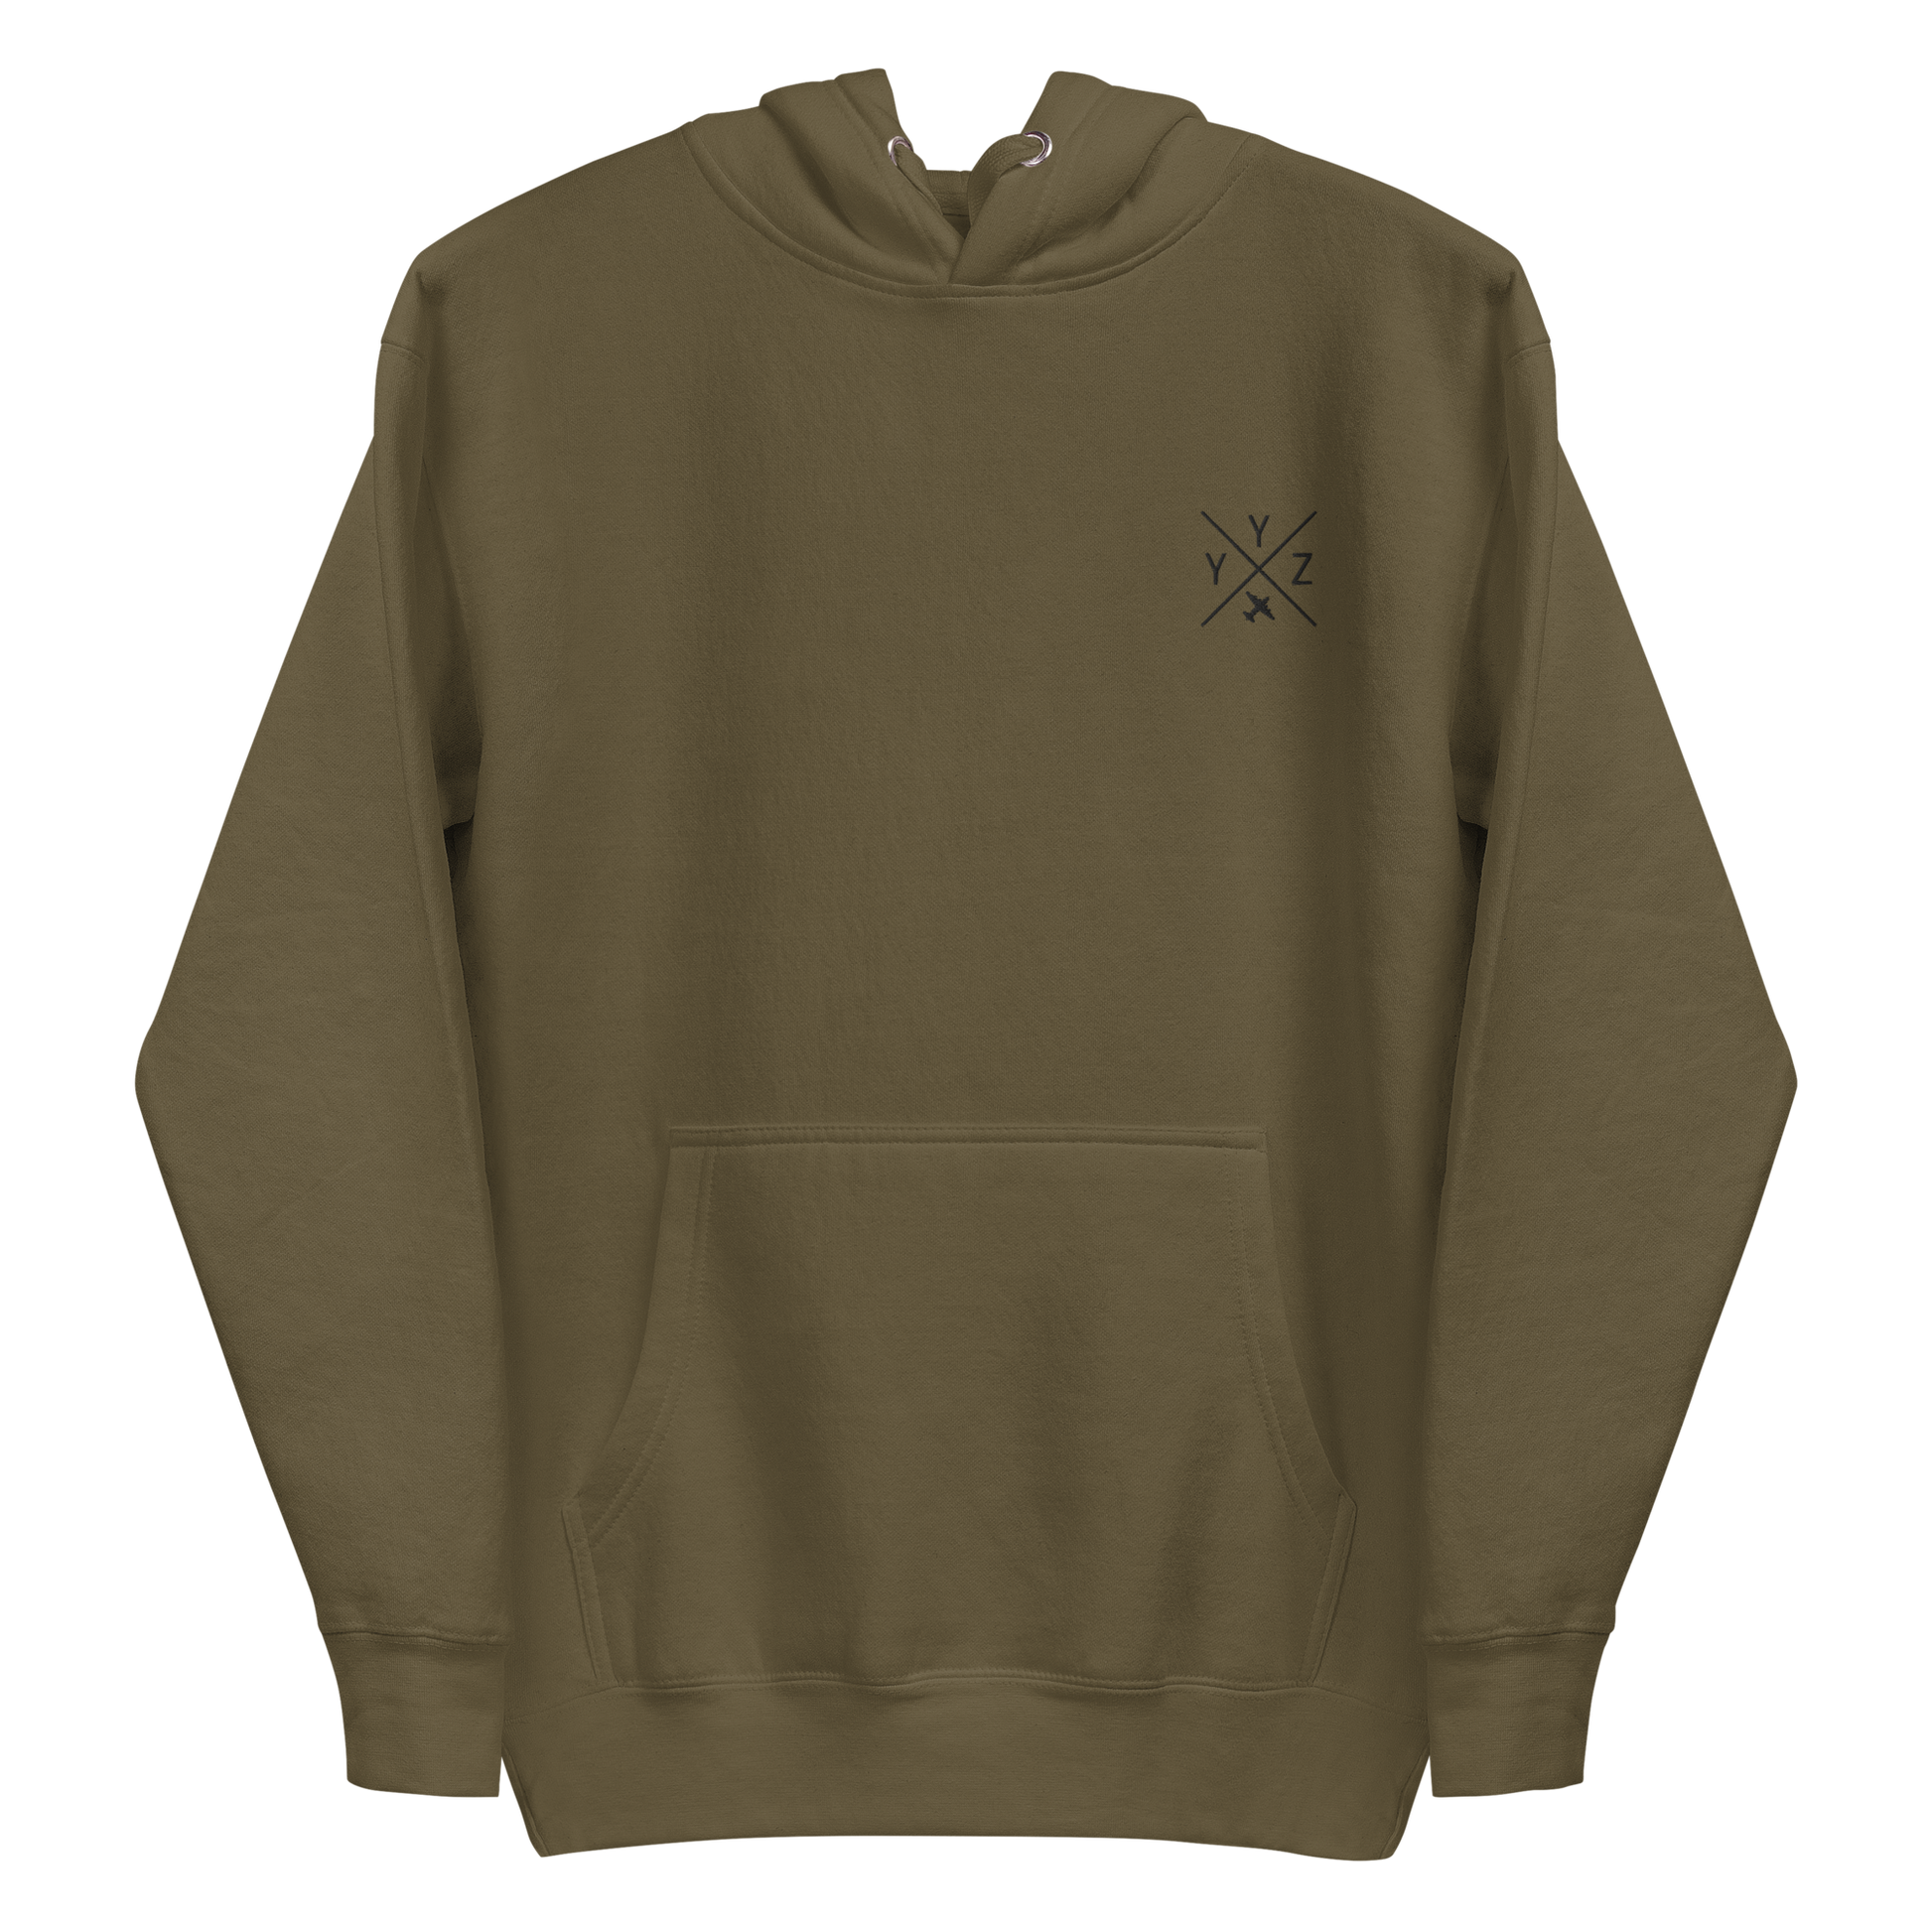 YHM Designs - YYZ Toronto Premium Hoodie - Crossed-X Design with Airport Code and Vintage Propliner - Black Embroidery - Image 06